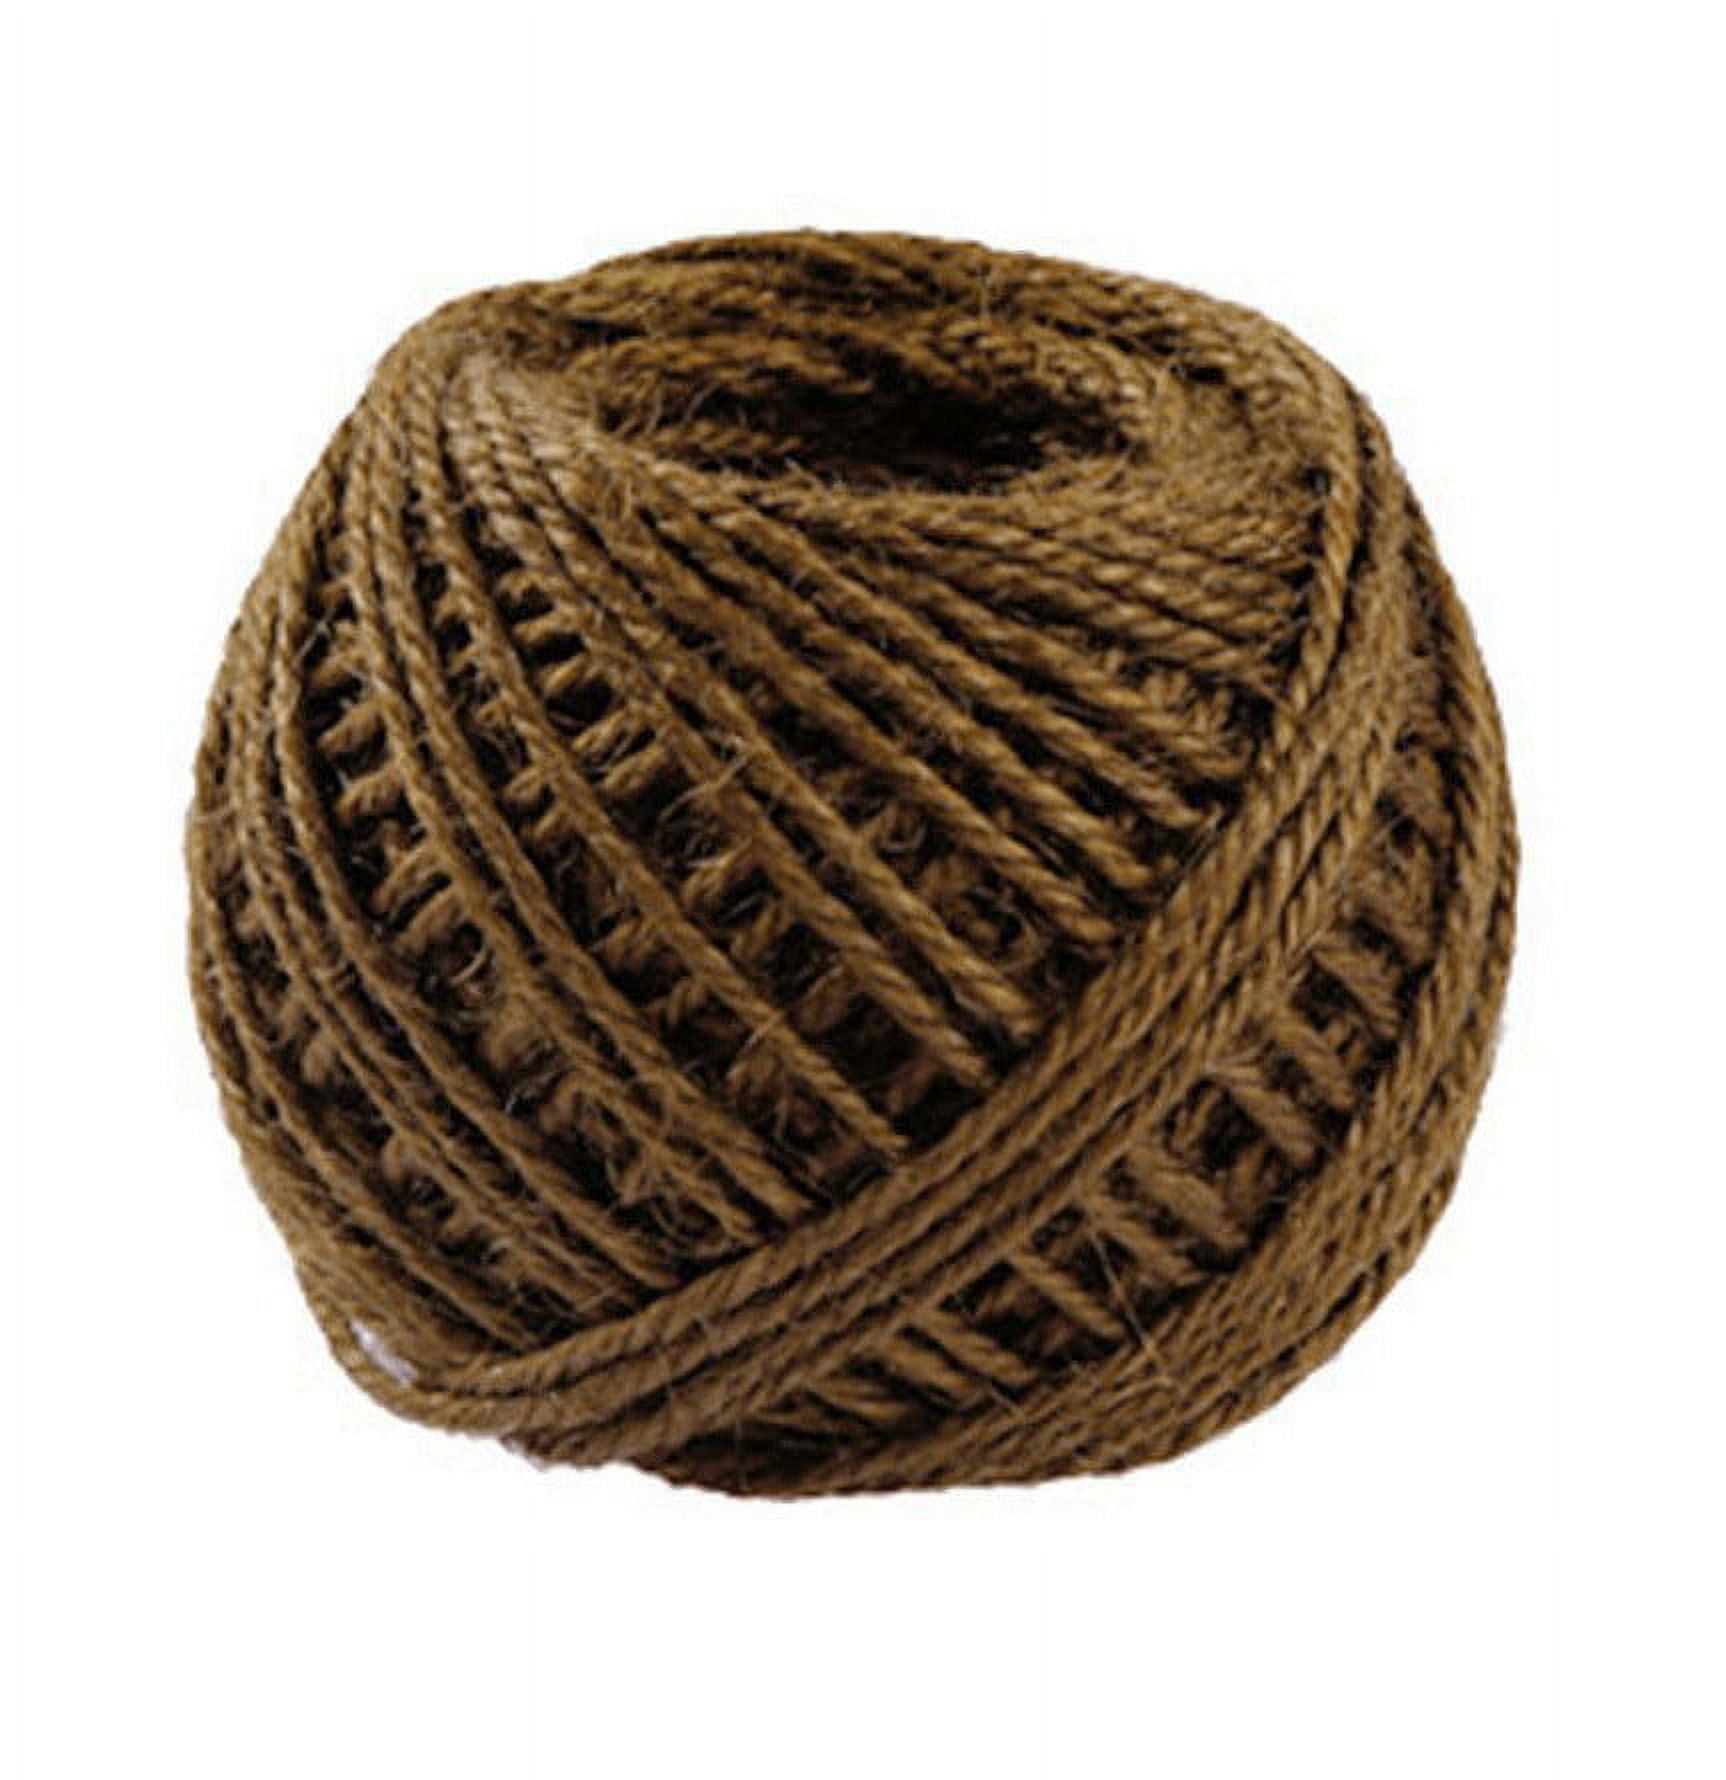 Shpwfbe Home Knitting & Crochet Supplies 40M Natural Brown Jute